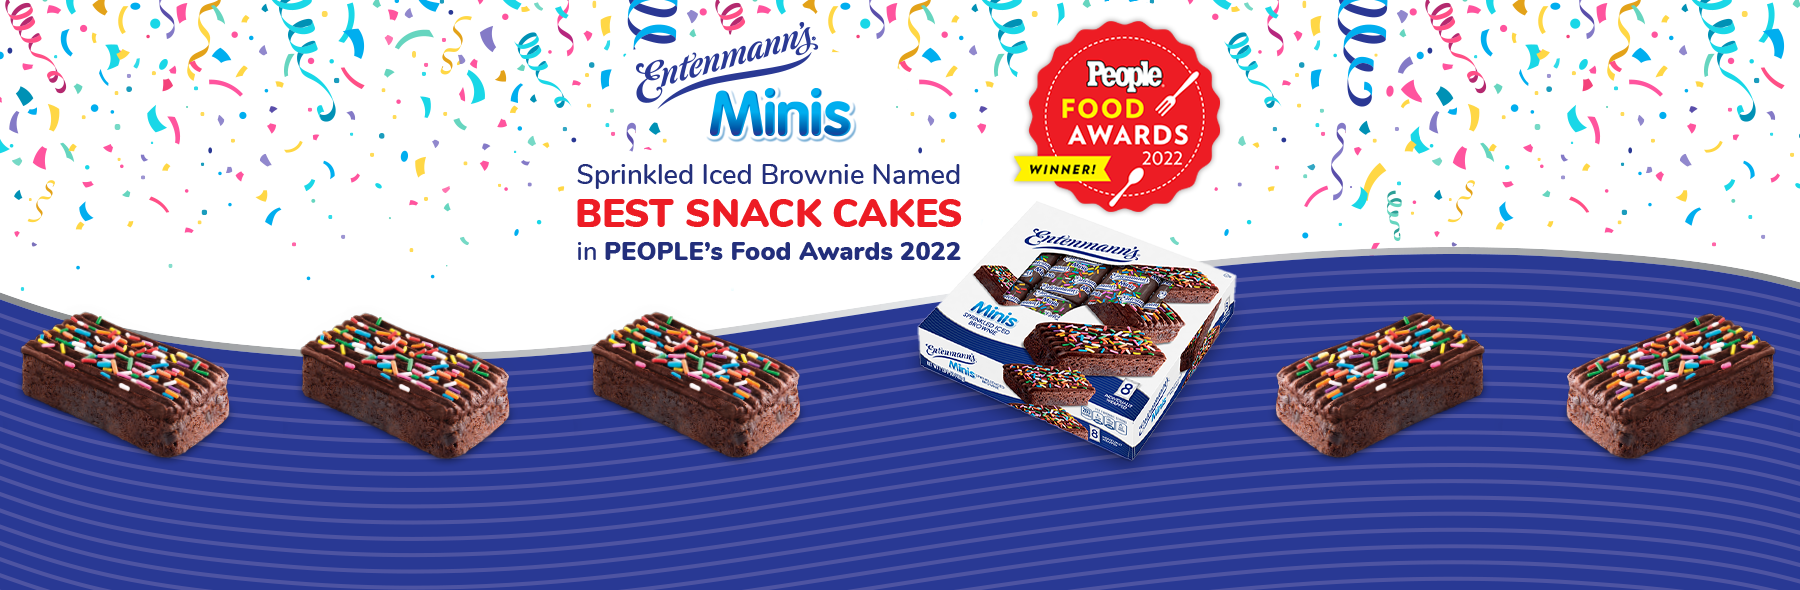 Entenmann's Minis Sprinkled Iced Brownie Named Best Snack Cakes in People's Food Awards 2022